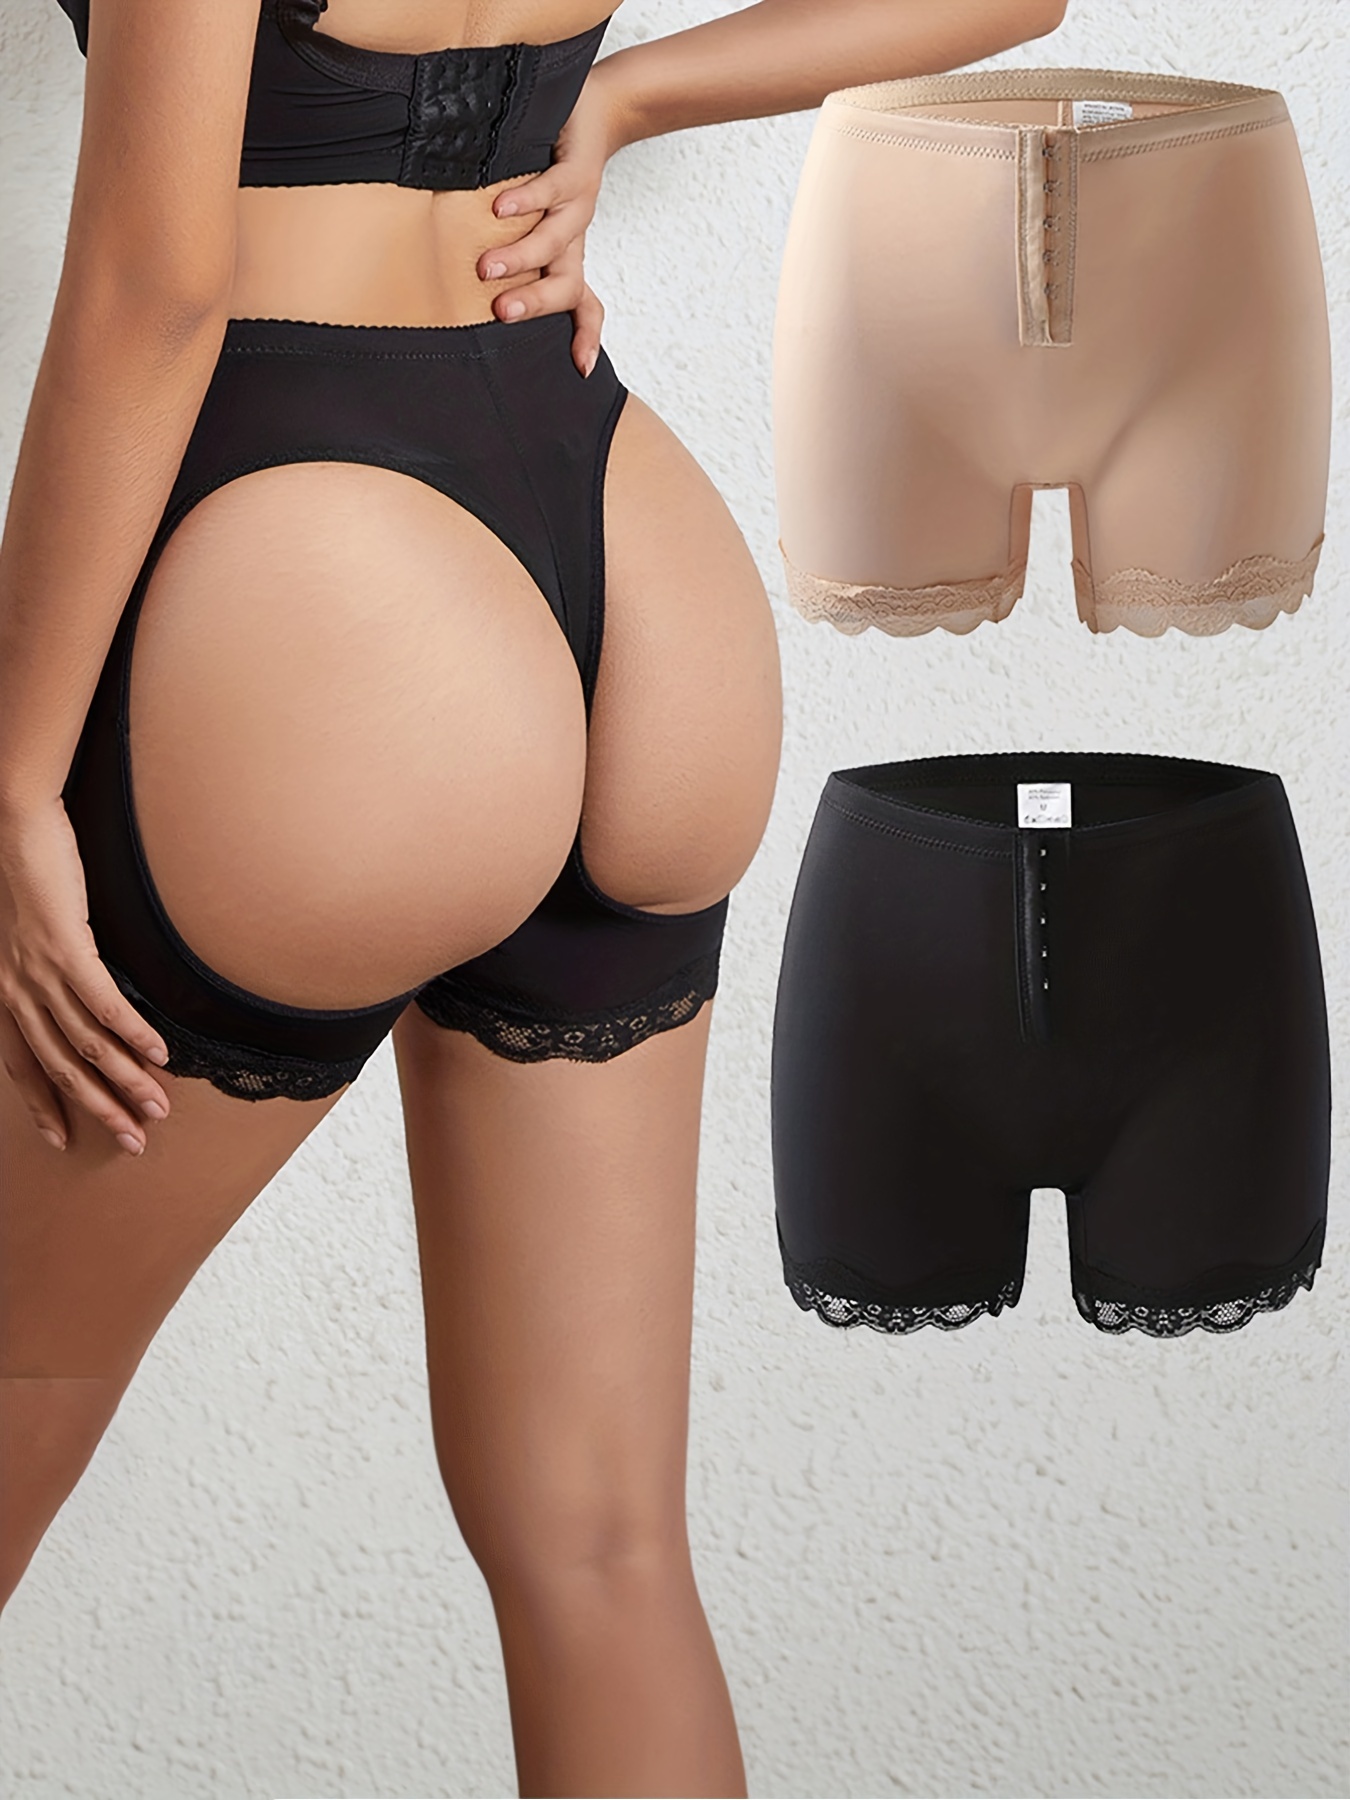 img.kwcdn.com/product/plus-size-sexy-panties/d69d2